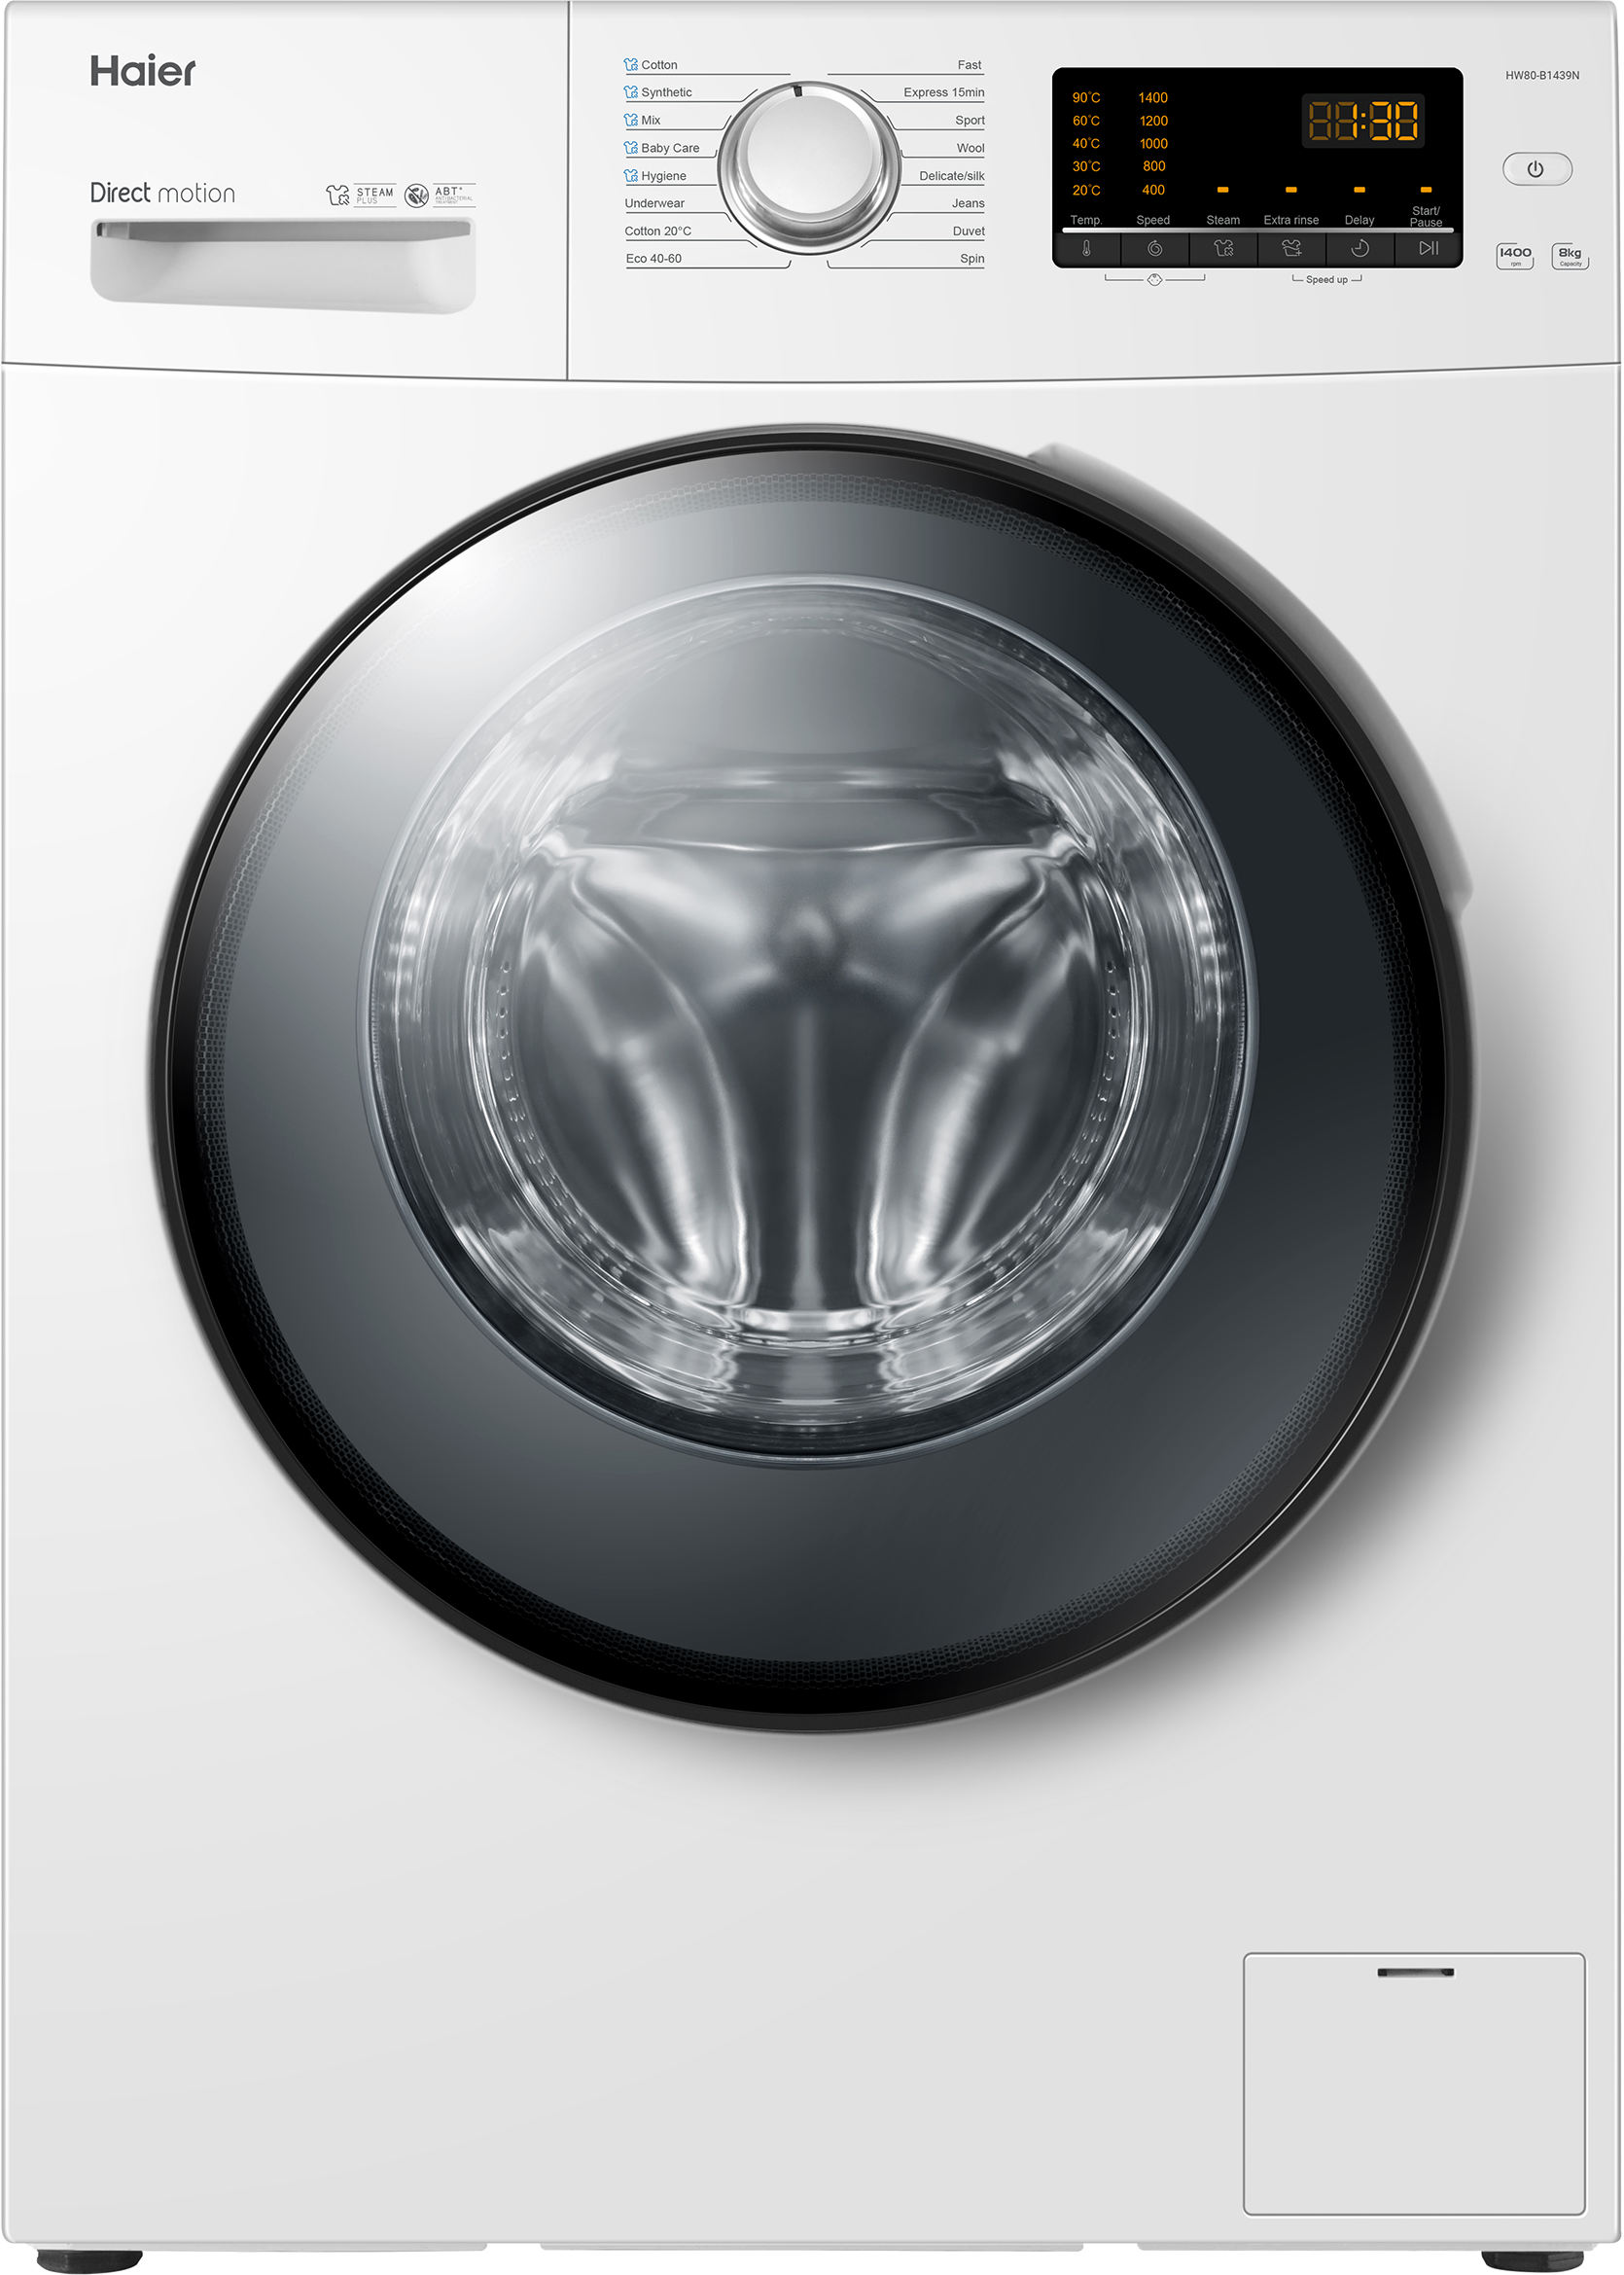 Haier HW80-B1439N 8kg Washing Machine with 1400 rpm - White - A Rated, White